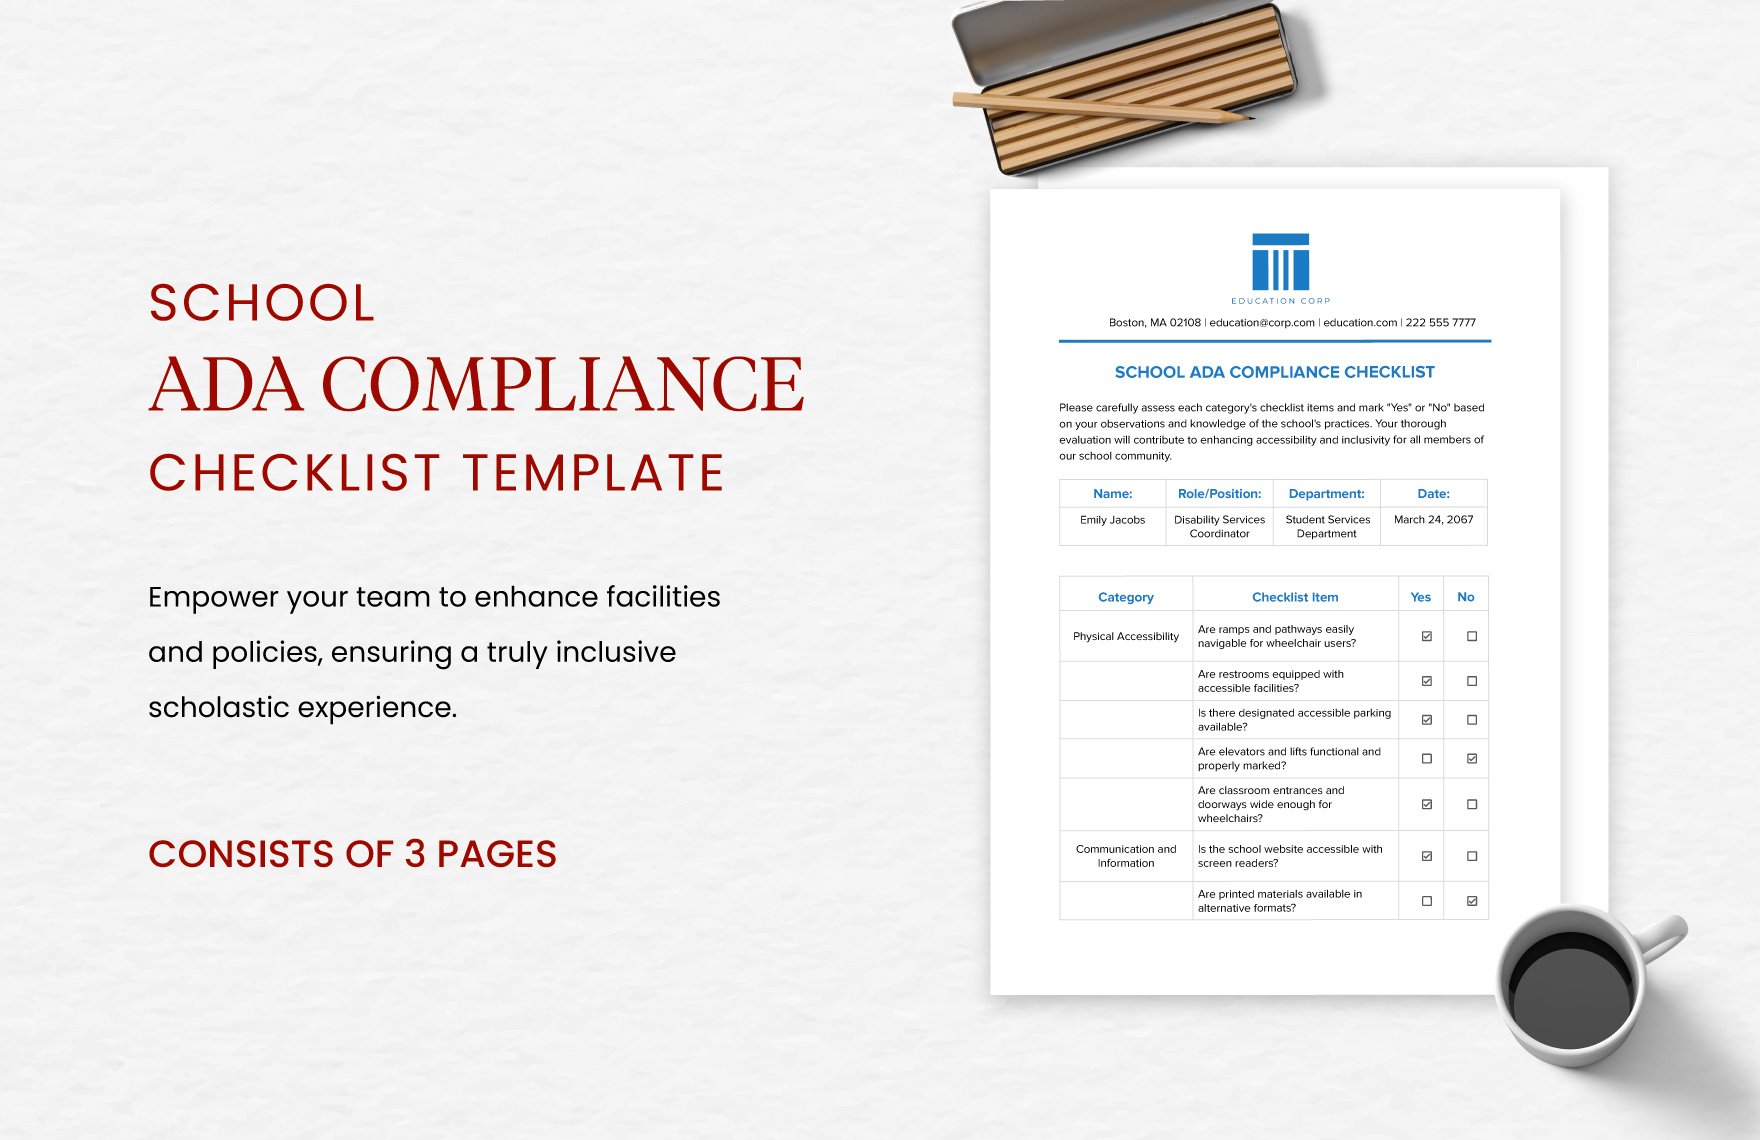 School ADA Compliance Checklist Template